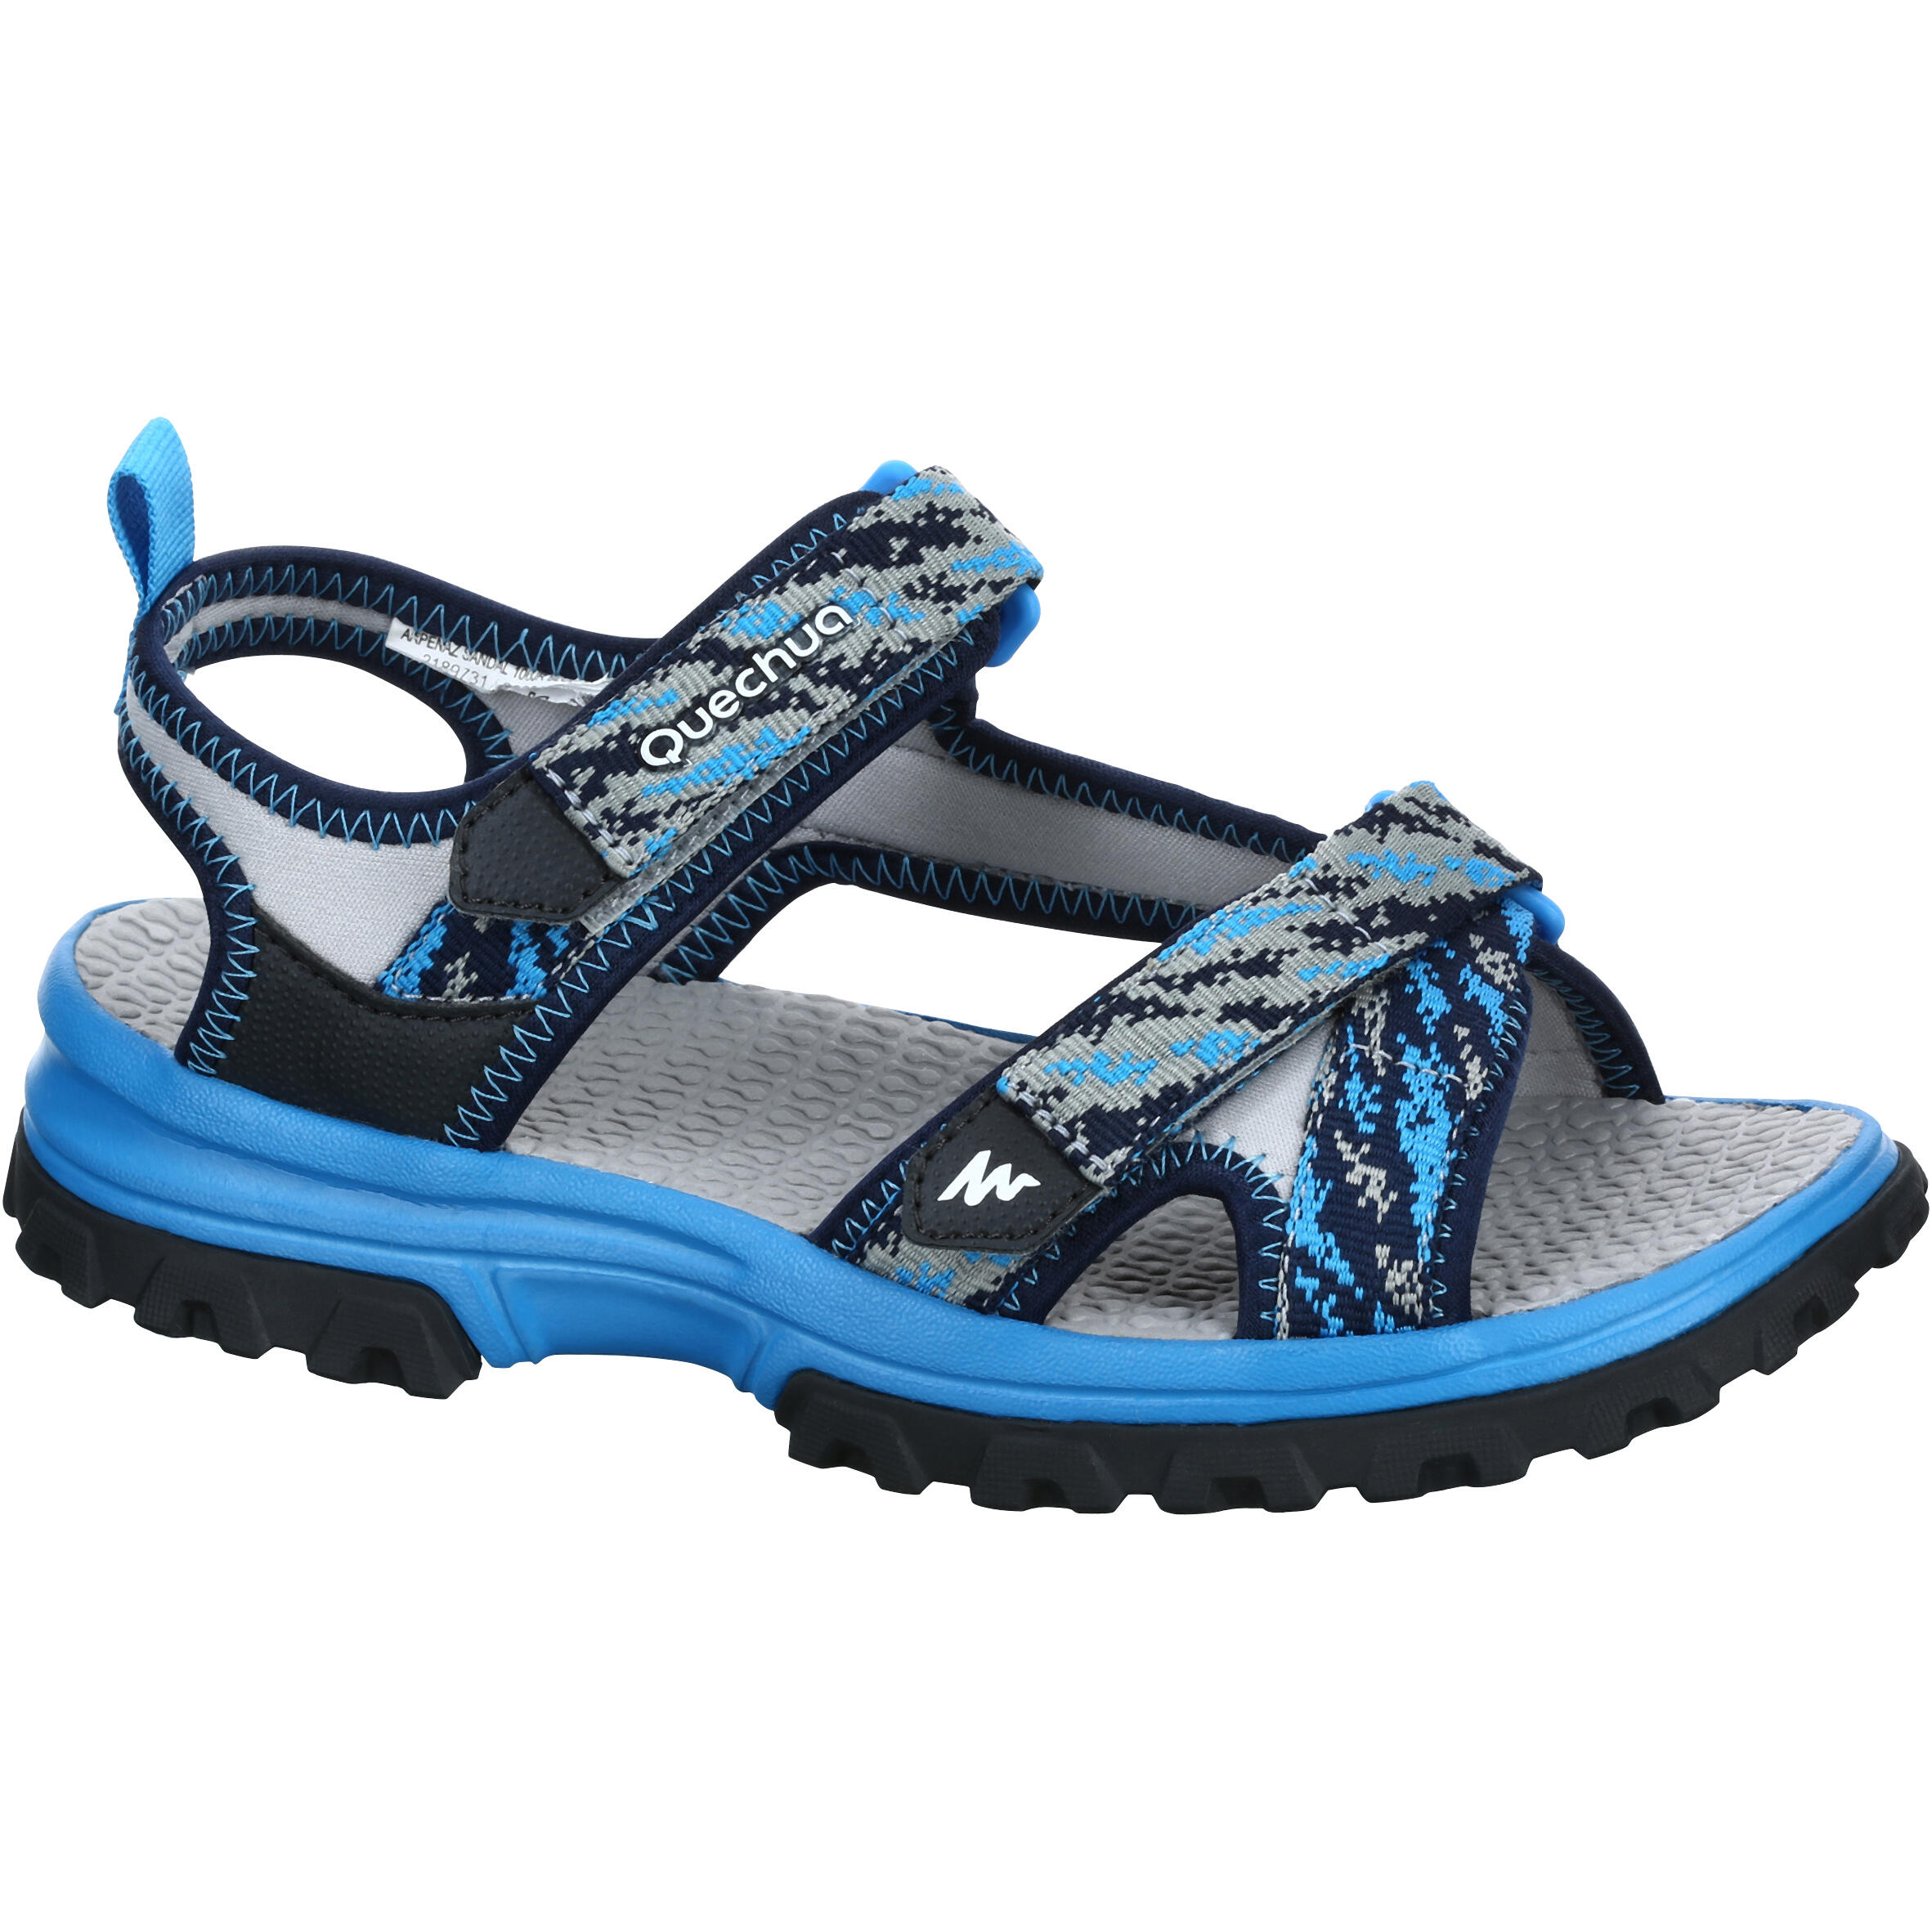 Sandal for Women Online| Arpenaz 50 Hiking Sandal Grey/Pink